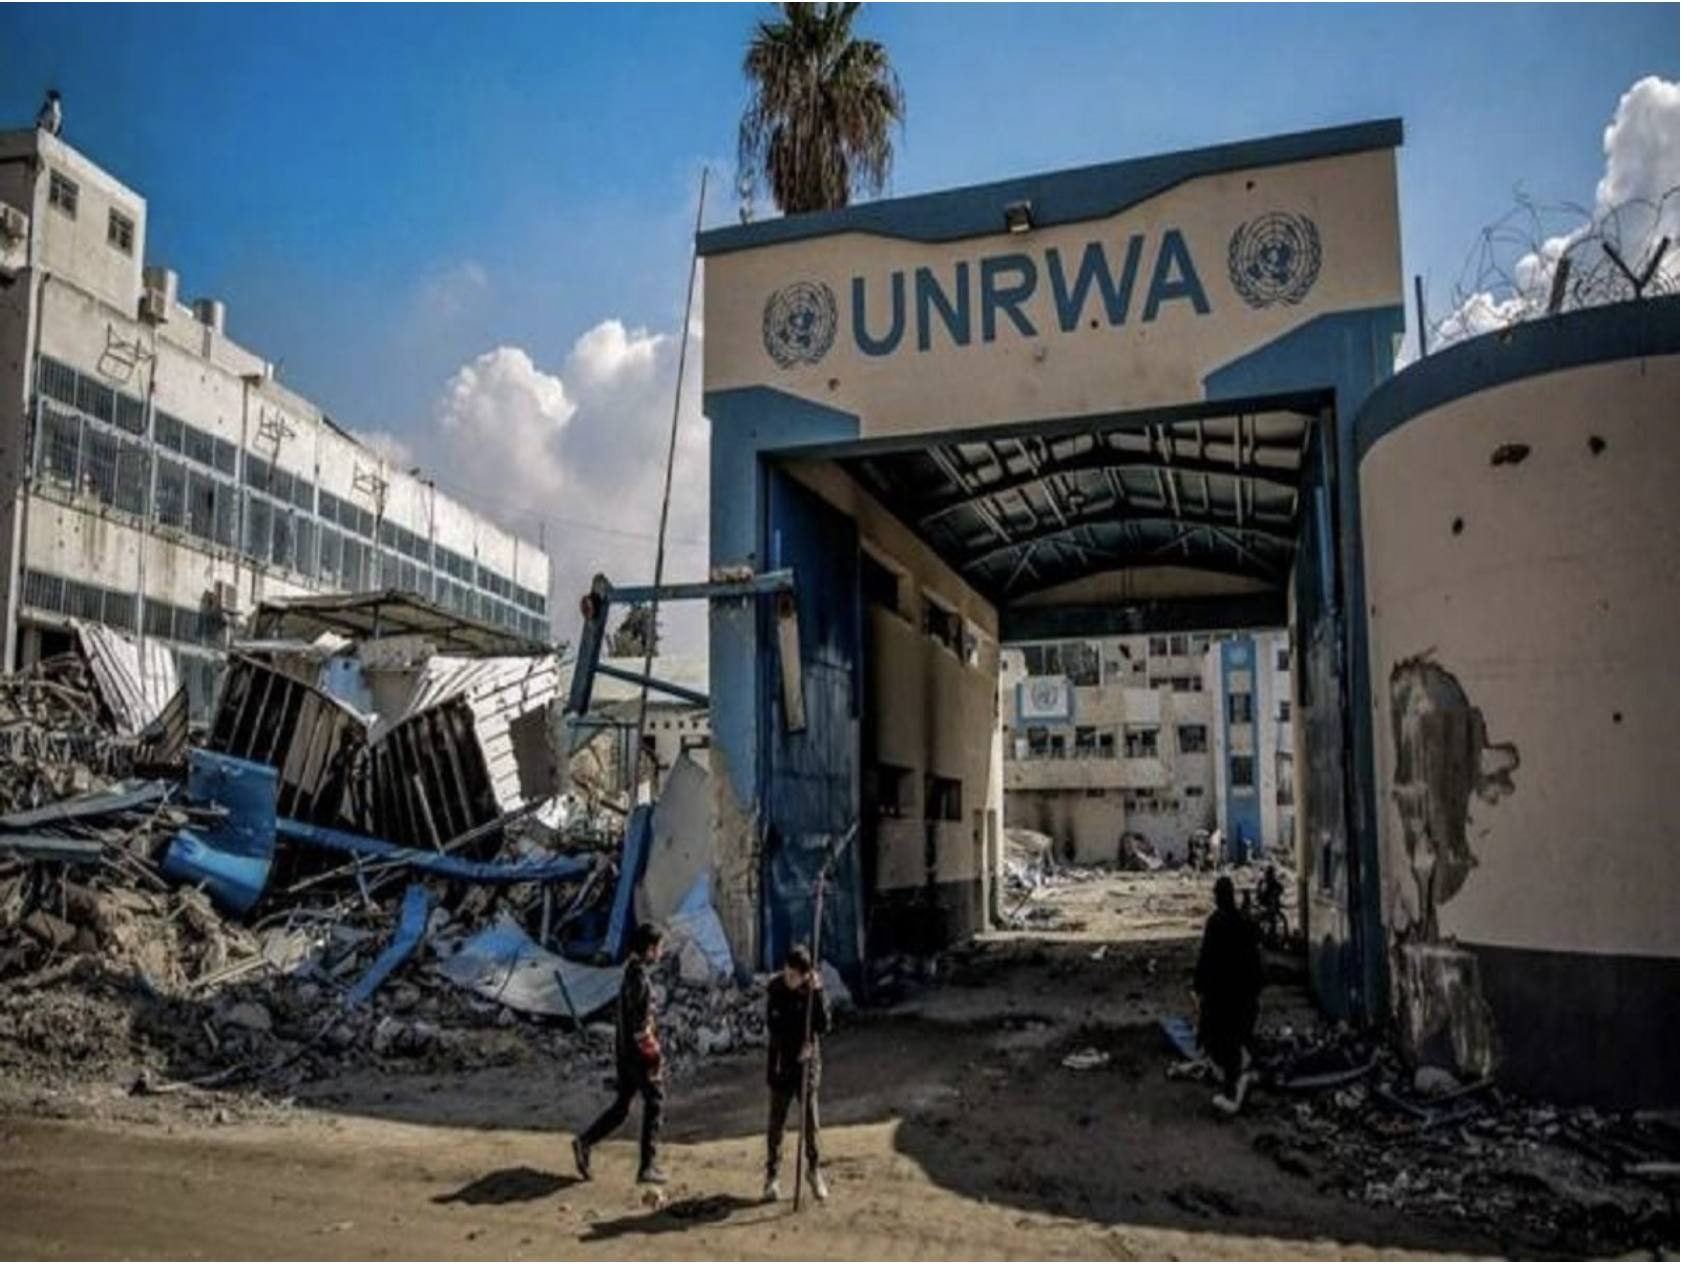 Qatar Fund for Development announces $25 million contribution to UNRWA